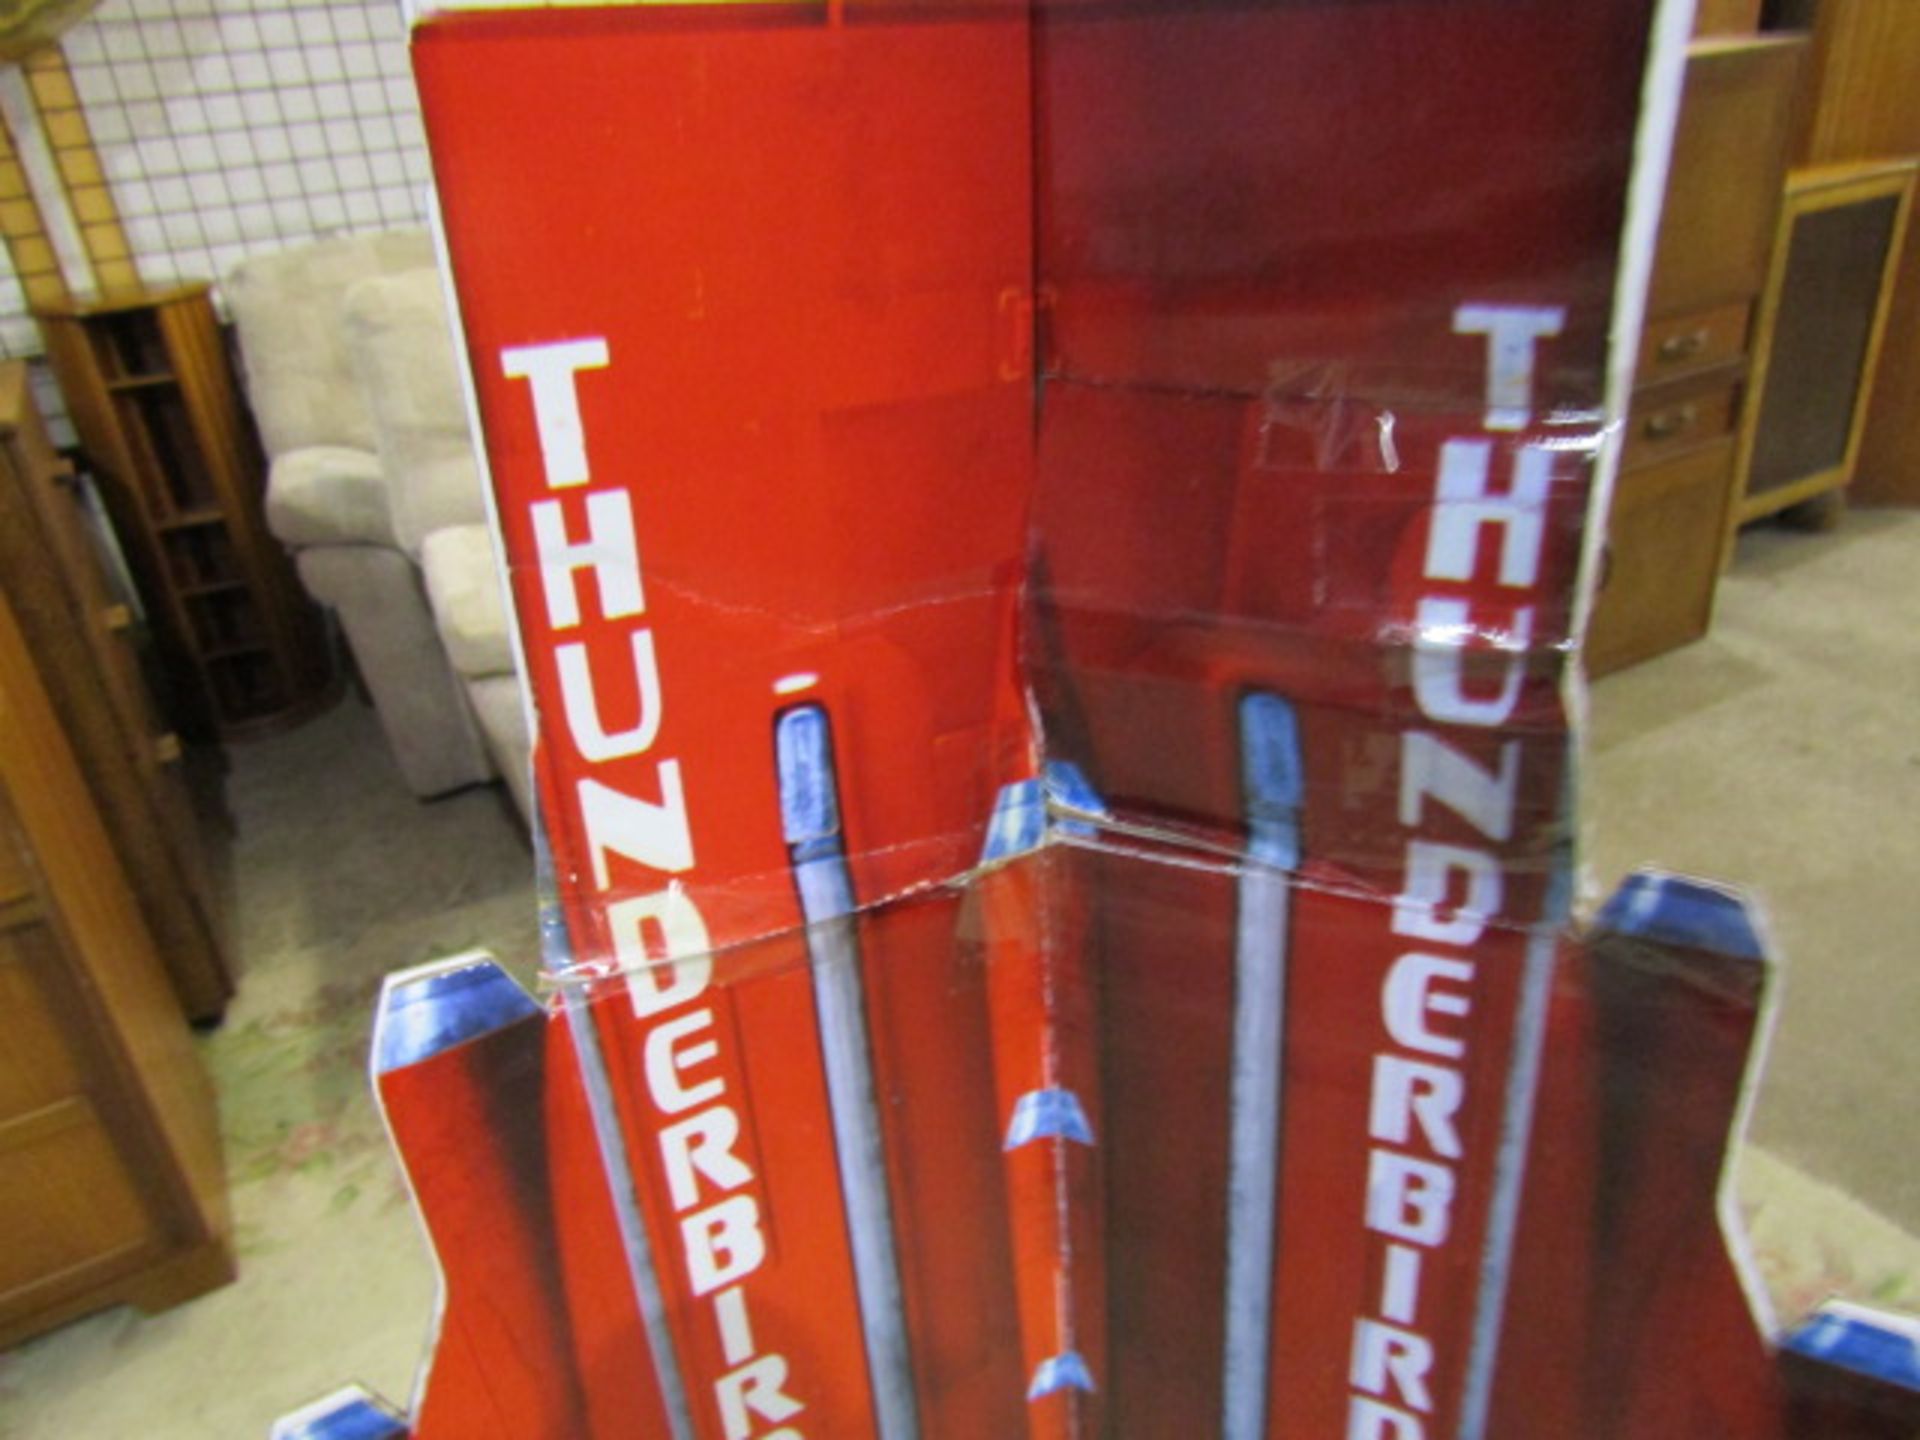 Thunderbirds cardboard shop display rocket and toys - Image 2 of 3